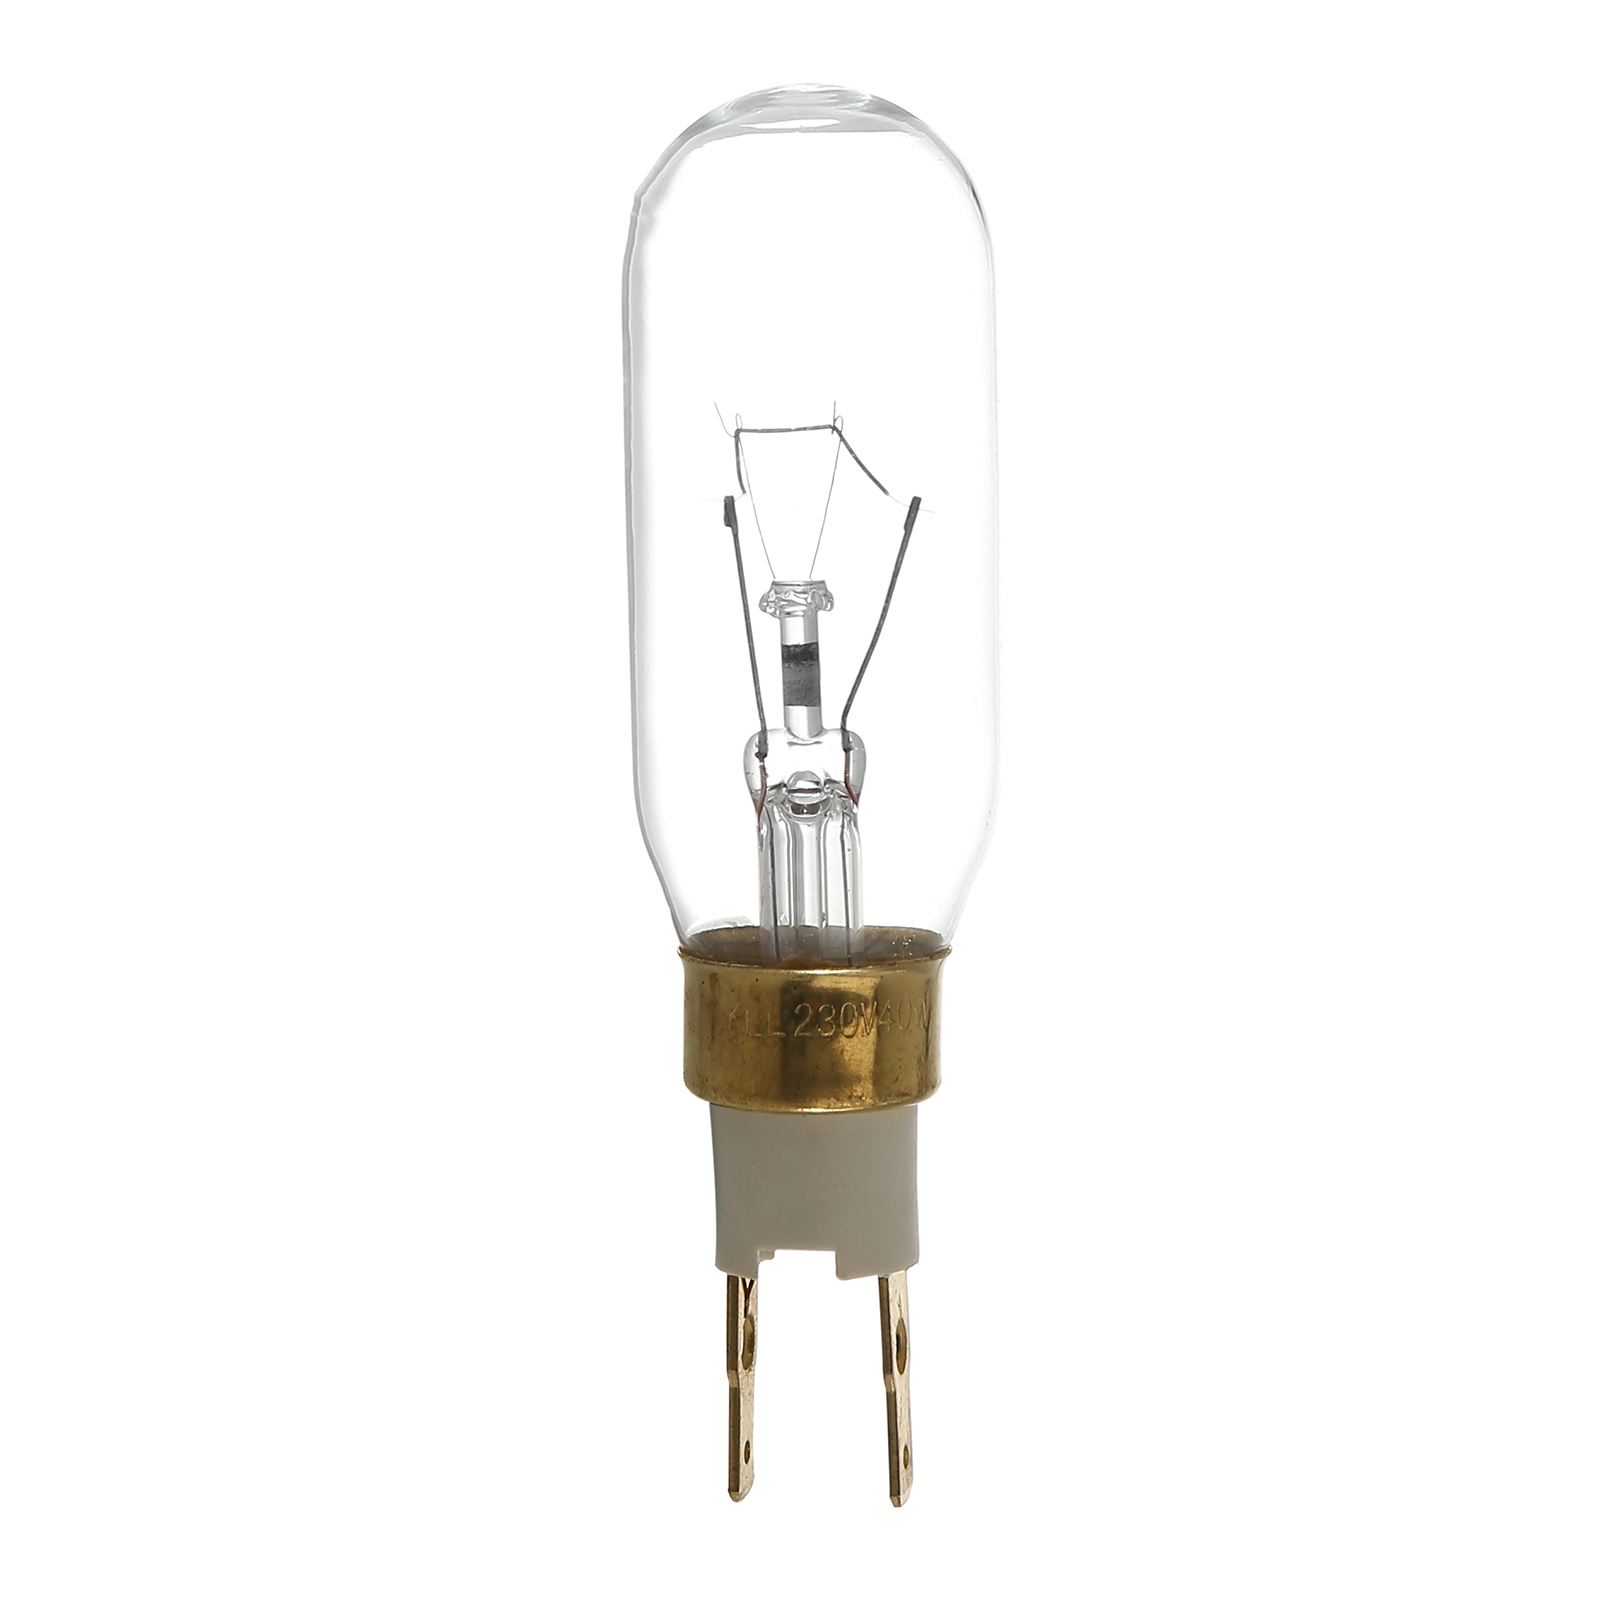 Whirlpool Fridge Freezer Lamp Light Bulb Type T Click 40w - 484000000986 LP32